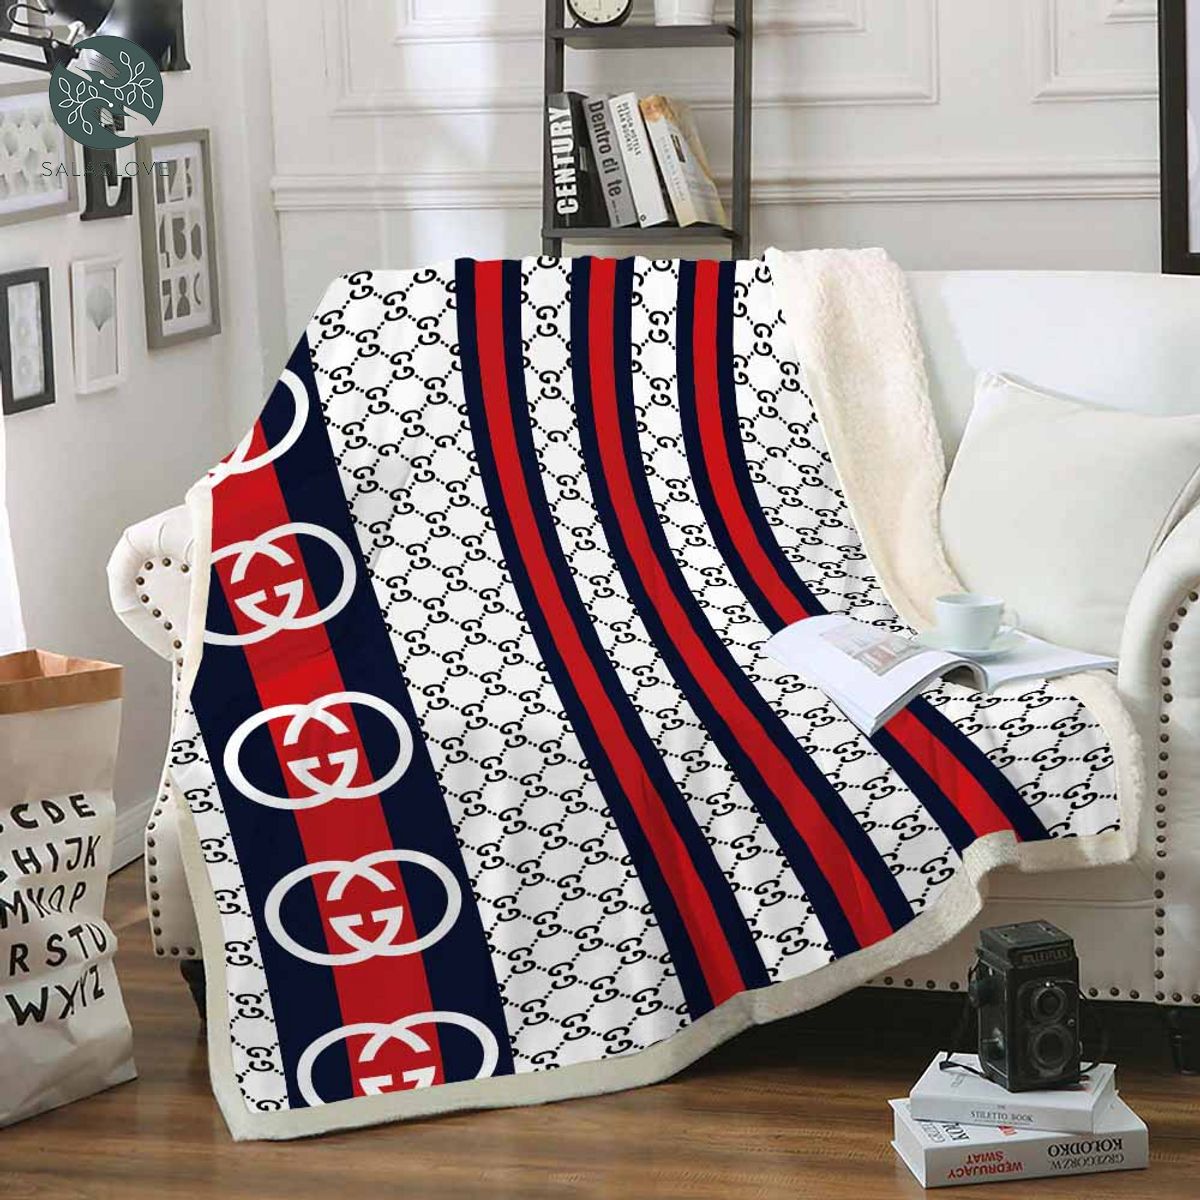 Luxruy Bedding Gucci Blanket Bedroom Blanket Air Conditioning Blanket